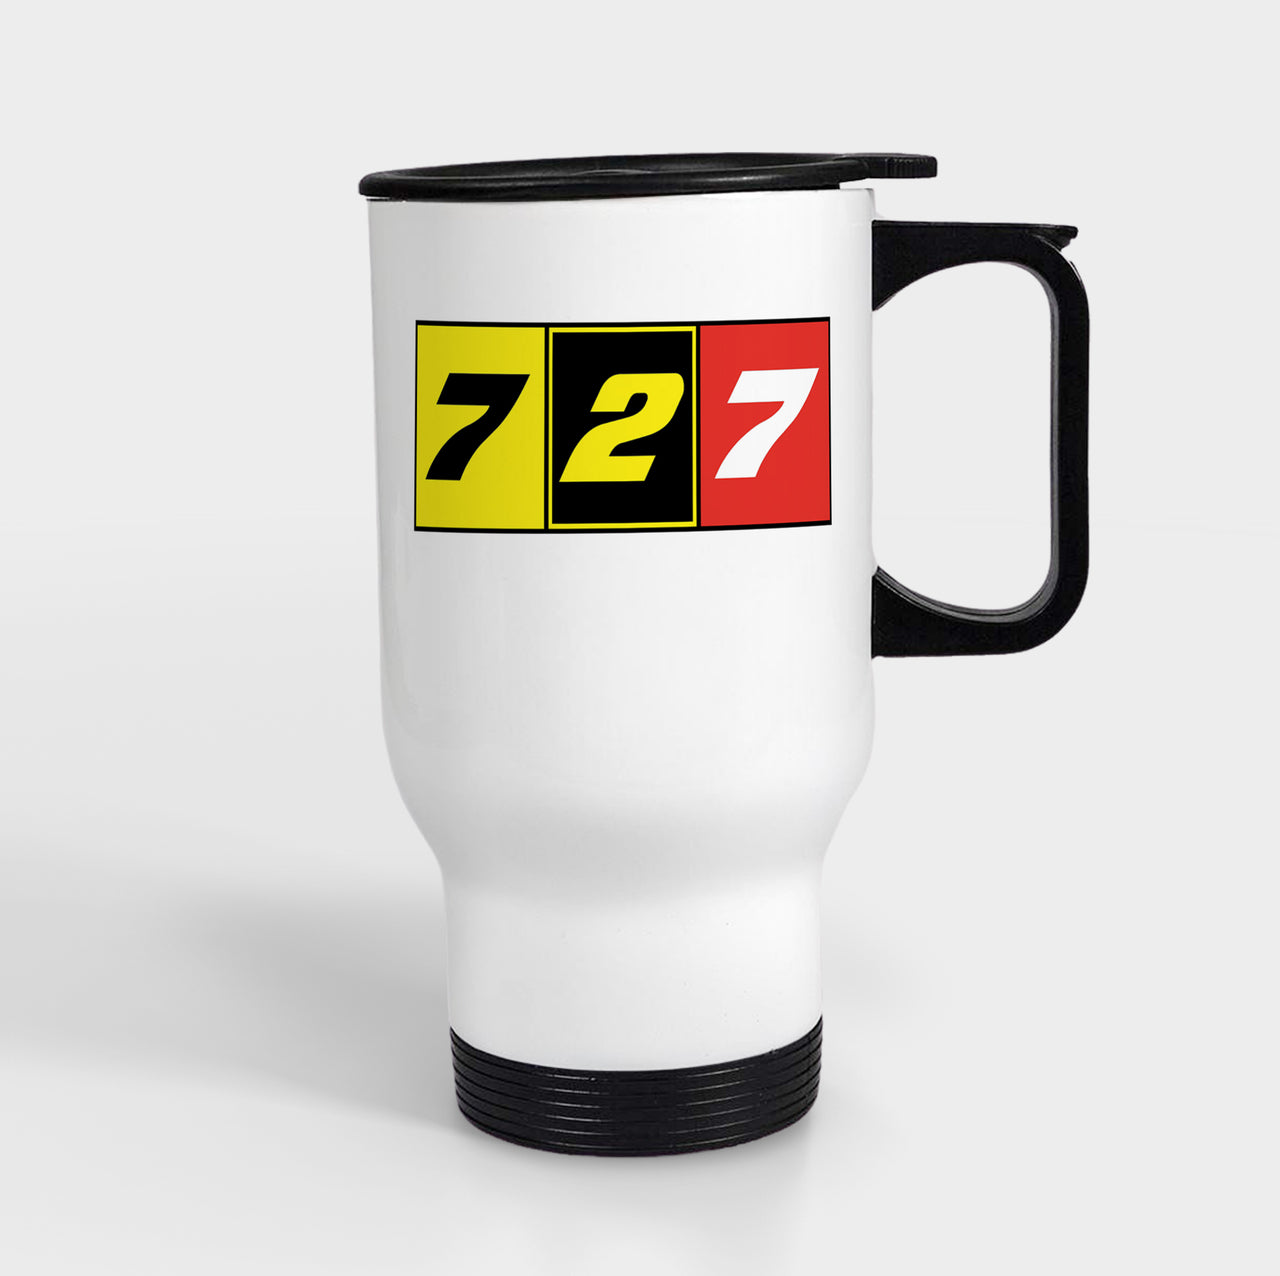 Flat Colourful 727 Designed Travel Mugs (With Holder)